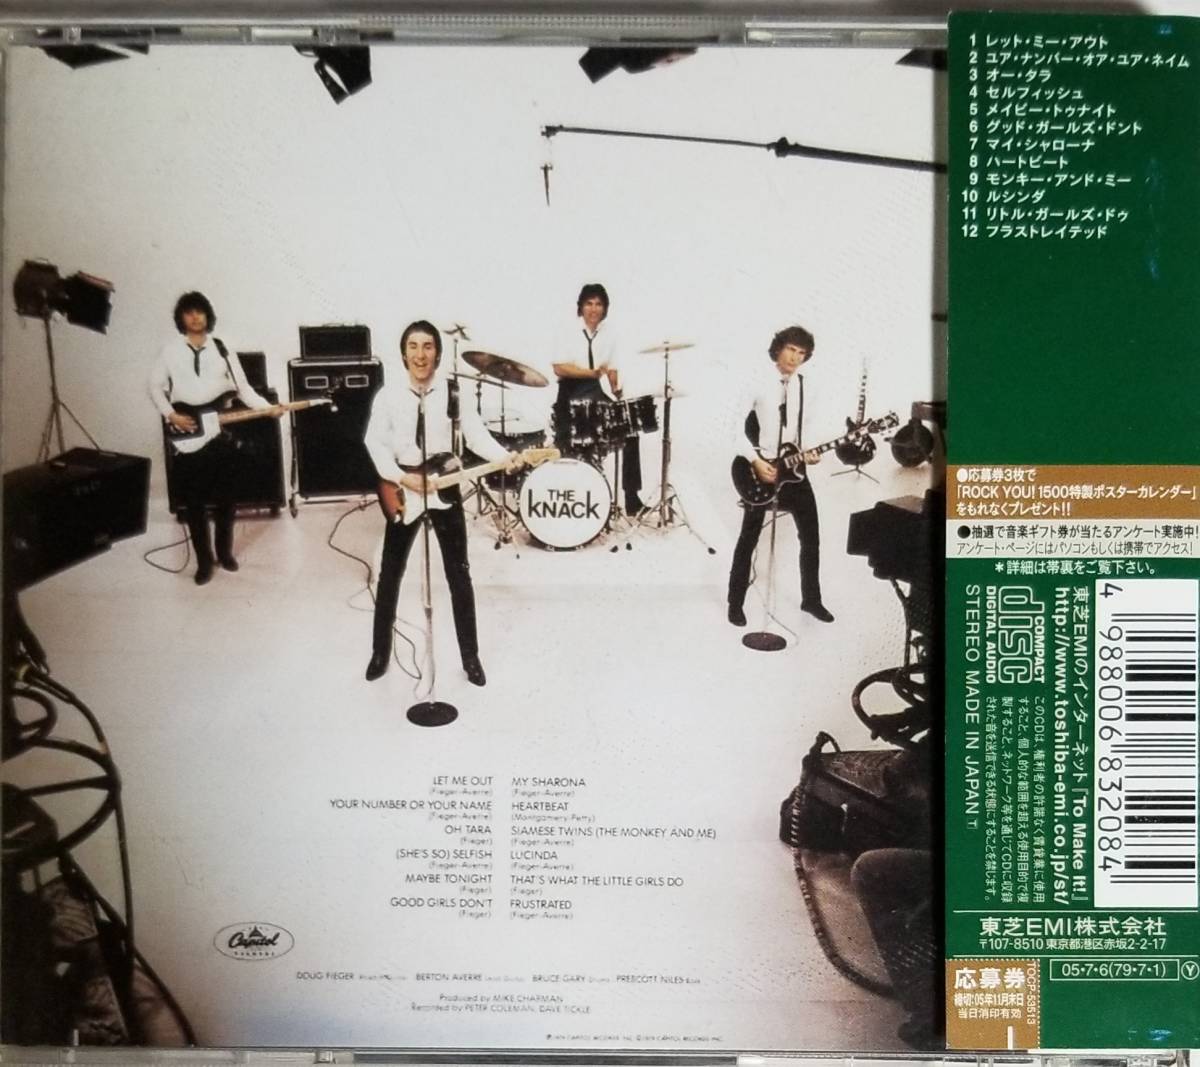 C75日本盤帯付き/送料無料■THEKNACK(ザ・ナック)「GetTheKnack」CD/マイシャローナ収録名盤